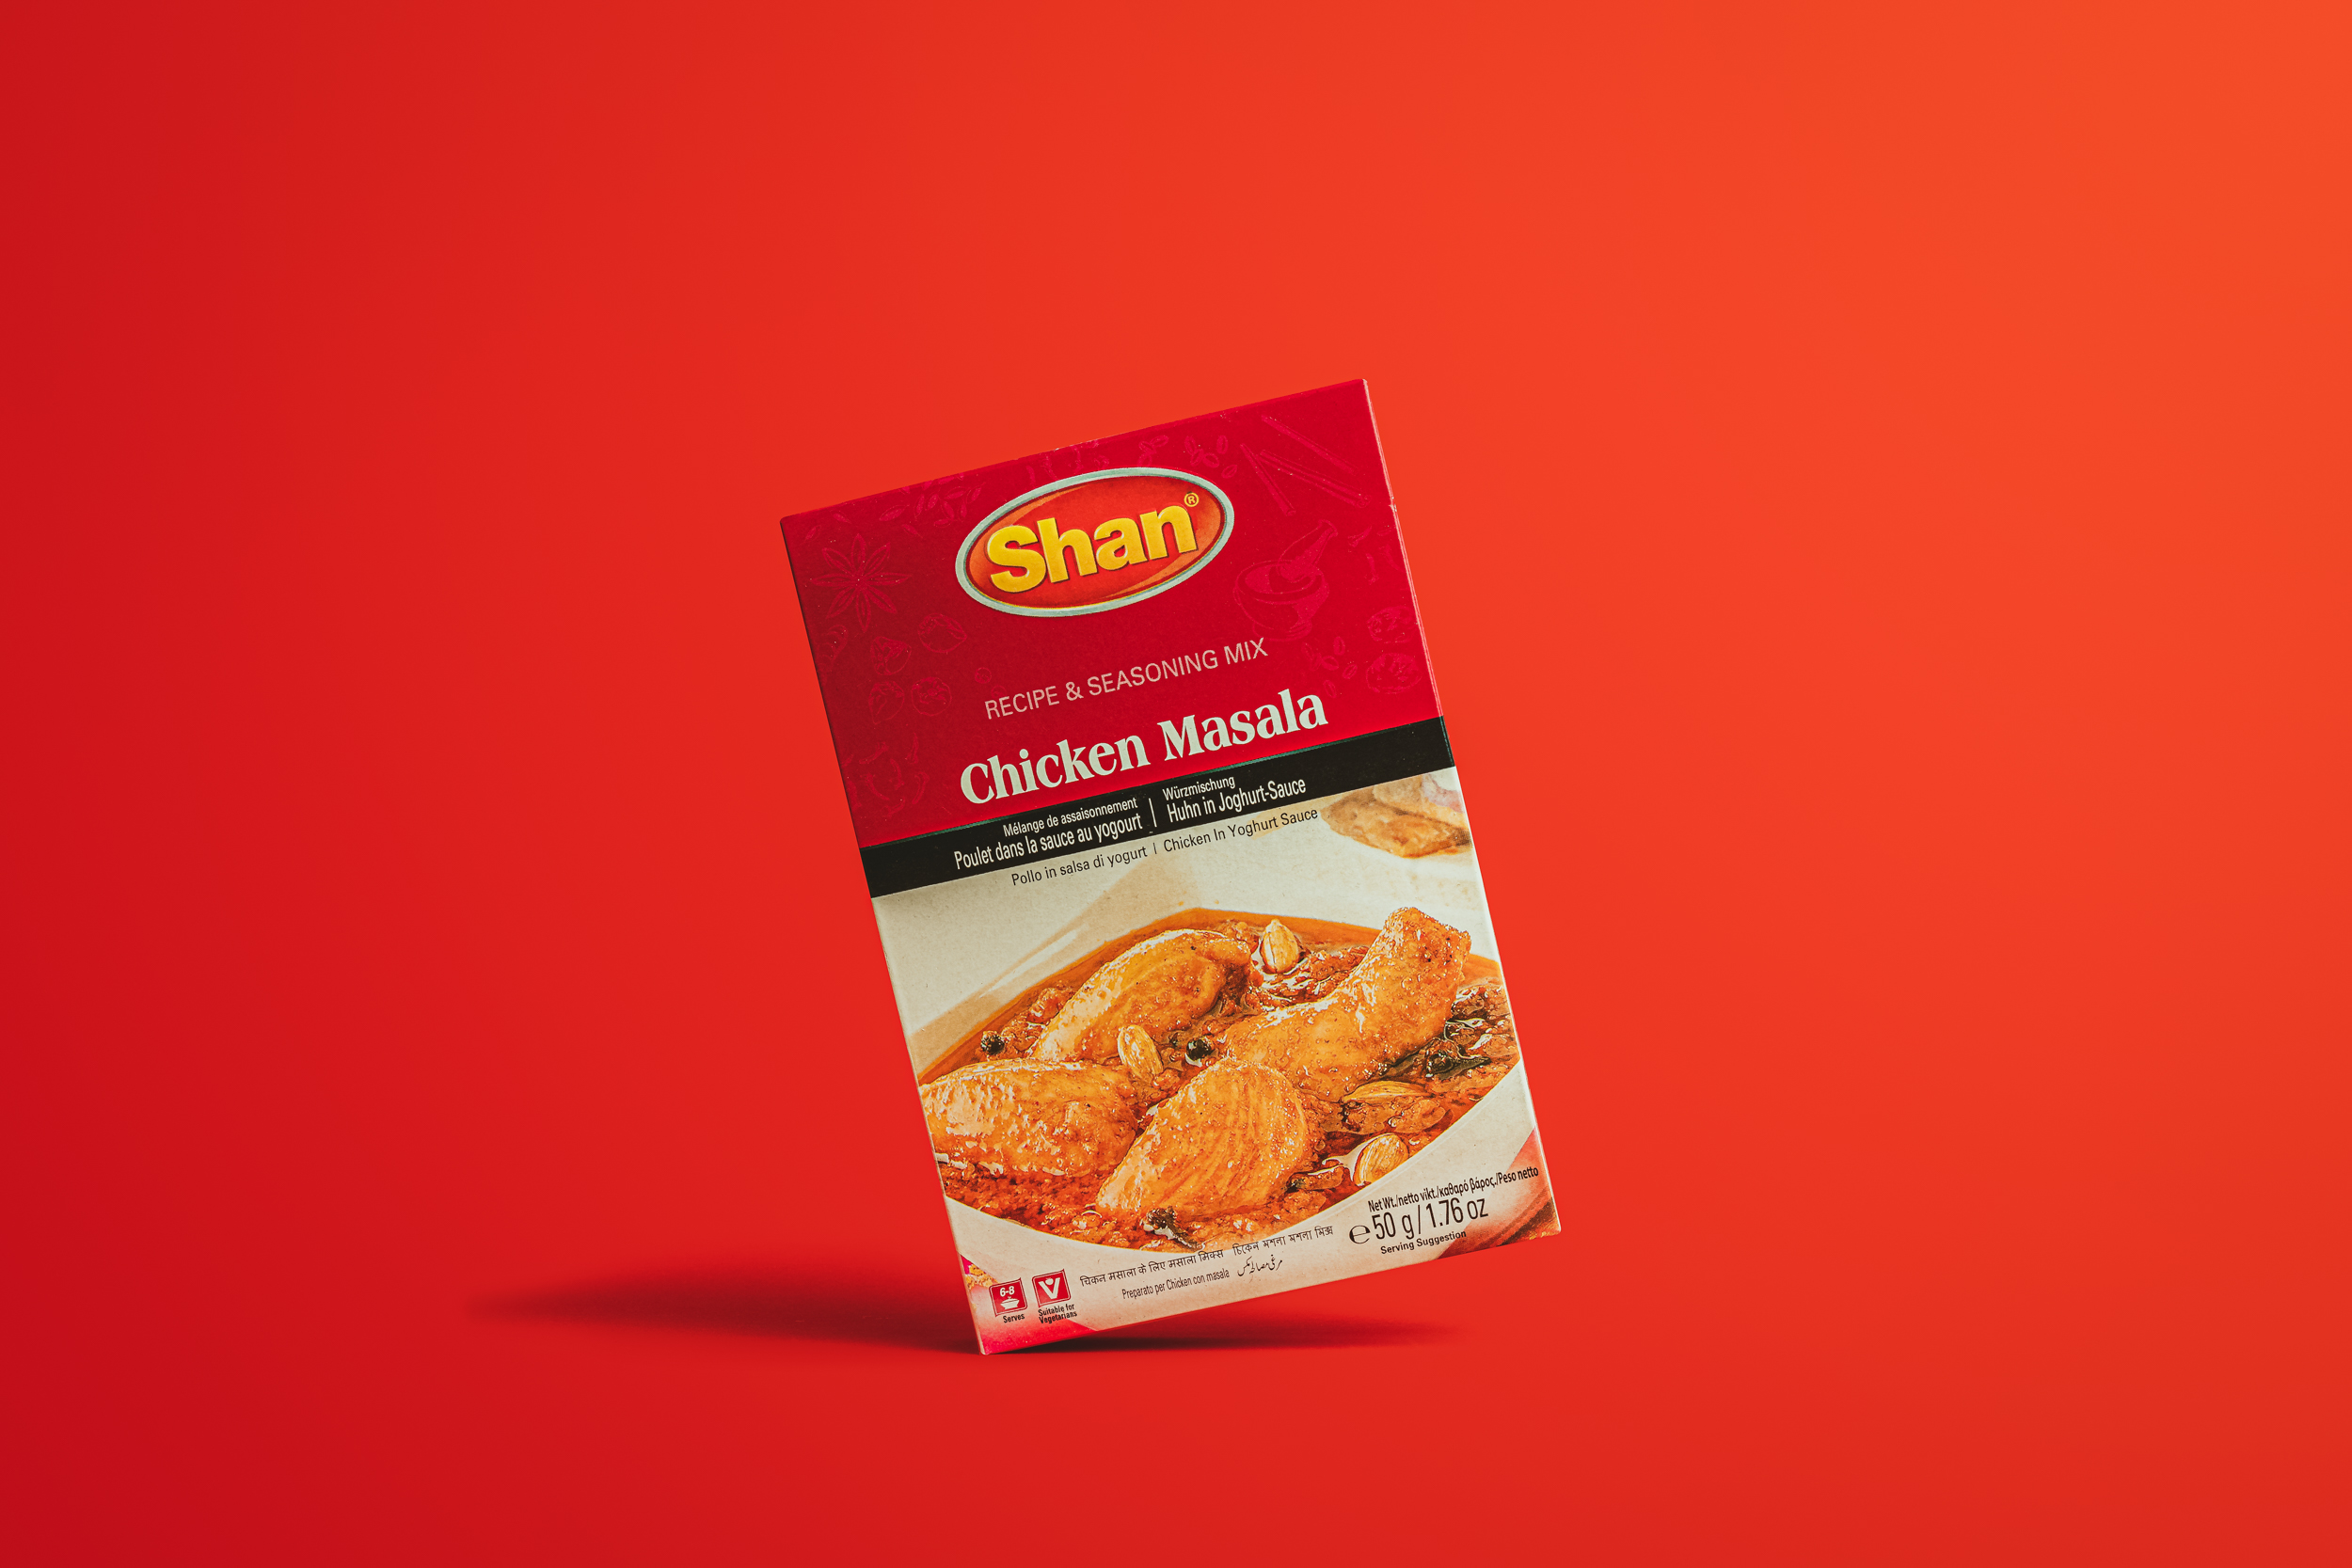 SHAN Chicken Masala